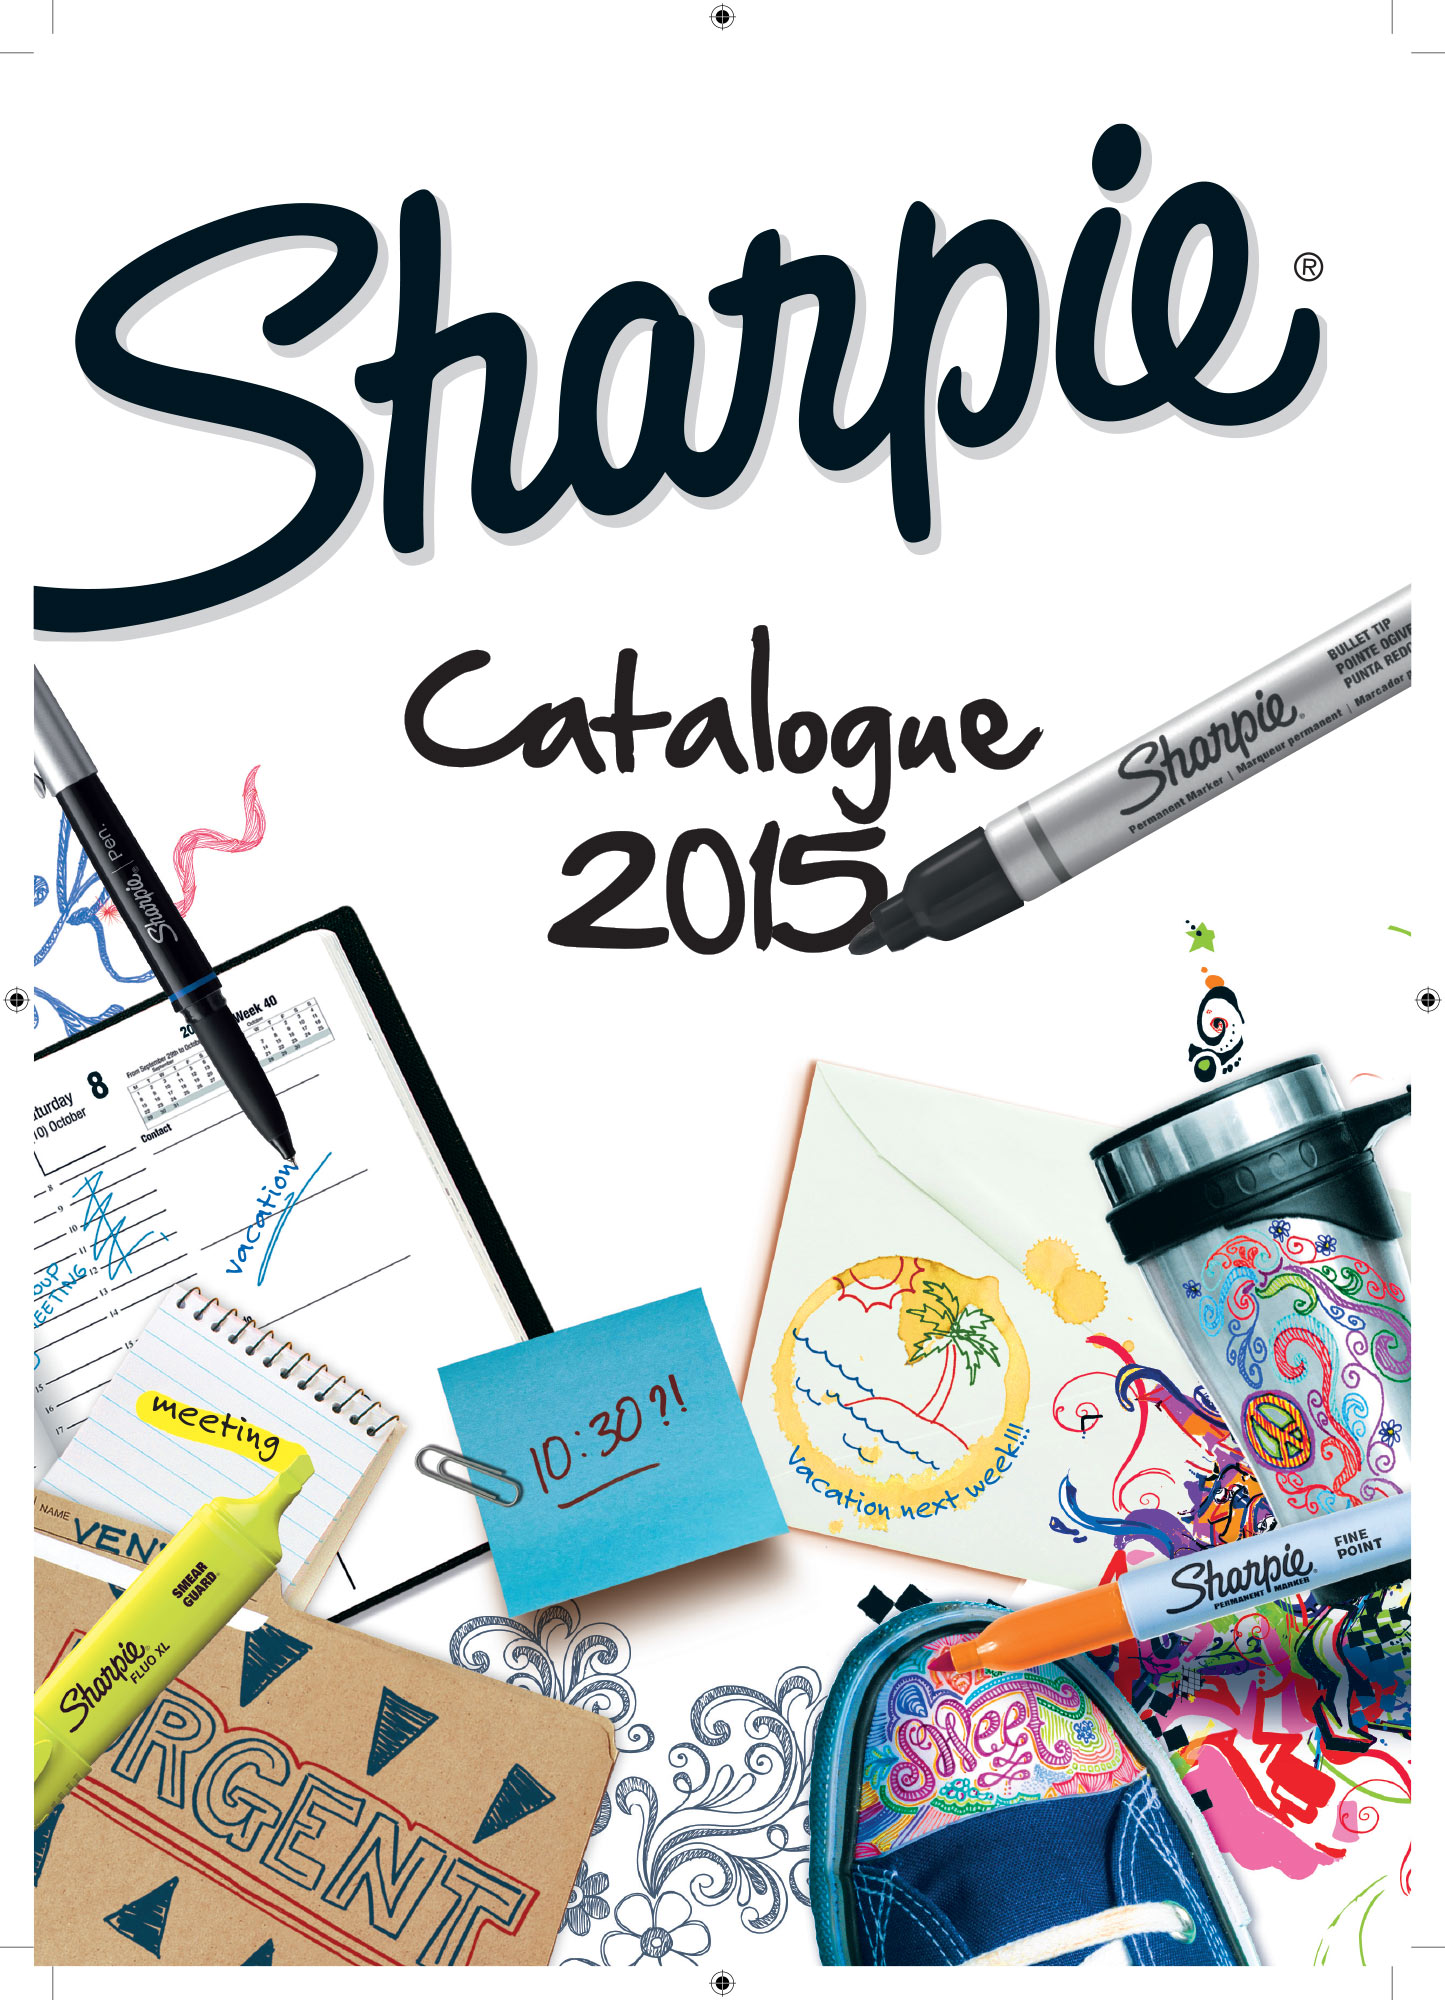 Sharpie Catalogue 2015